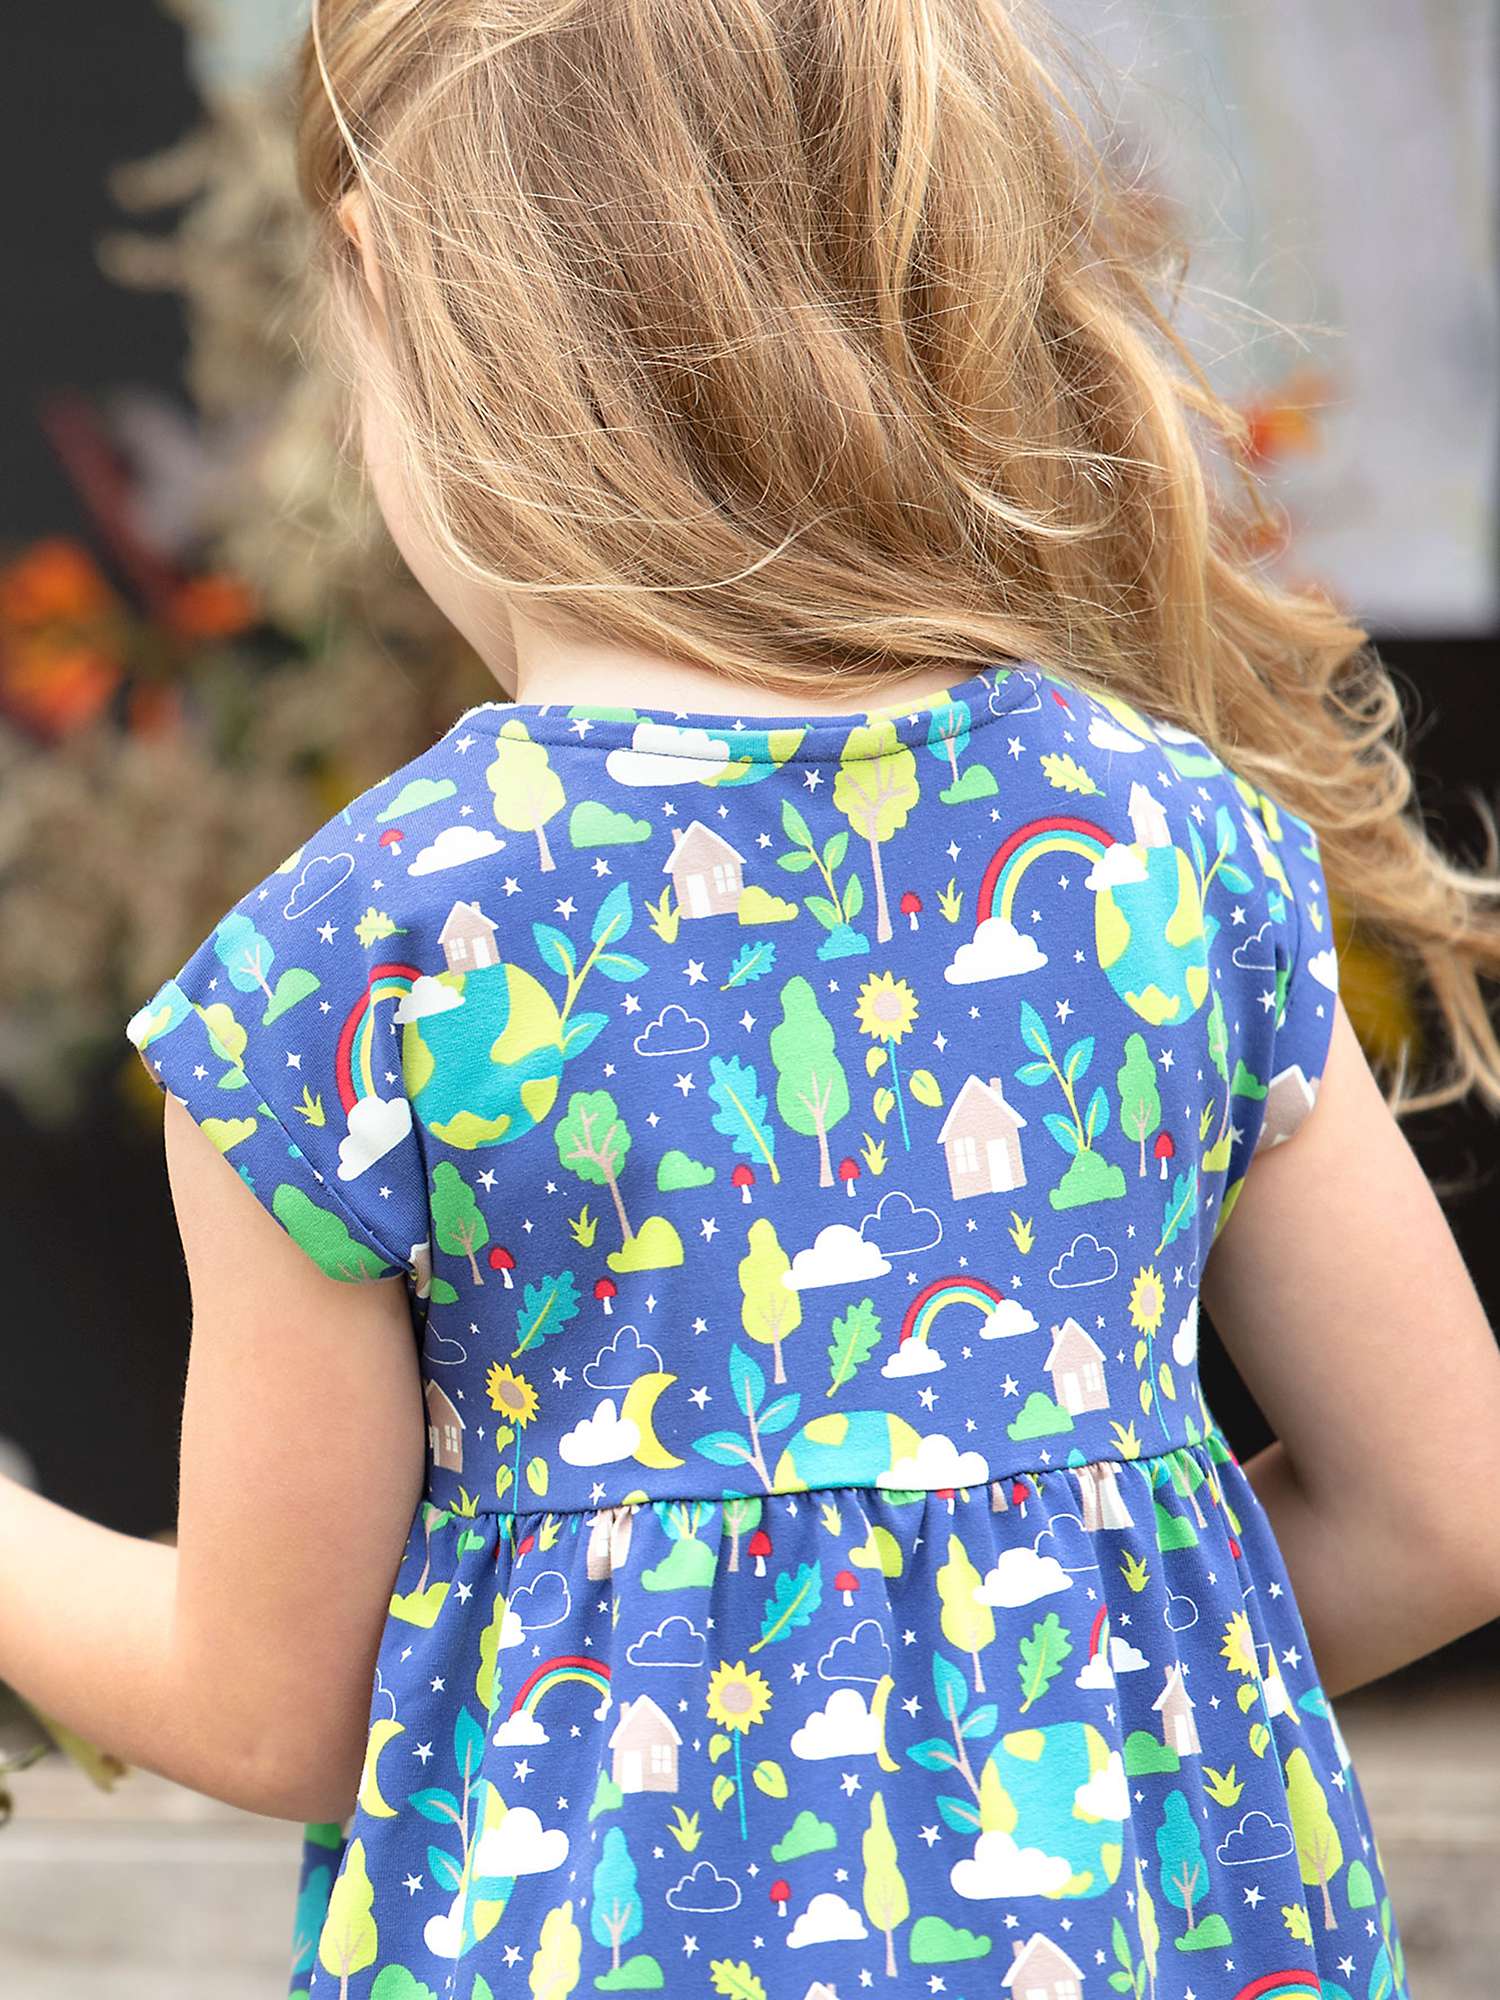 Buy Frugi Kids' Celia Organic Cotton Blend Print Dress, Earth Day Online at johnlewis.com